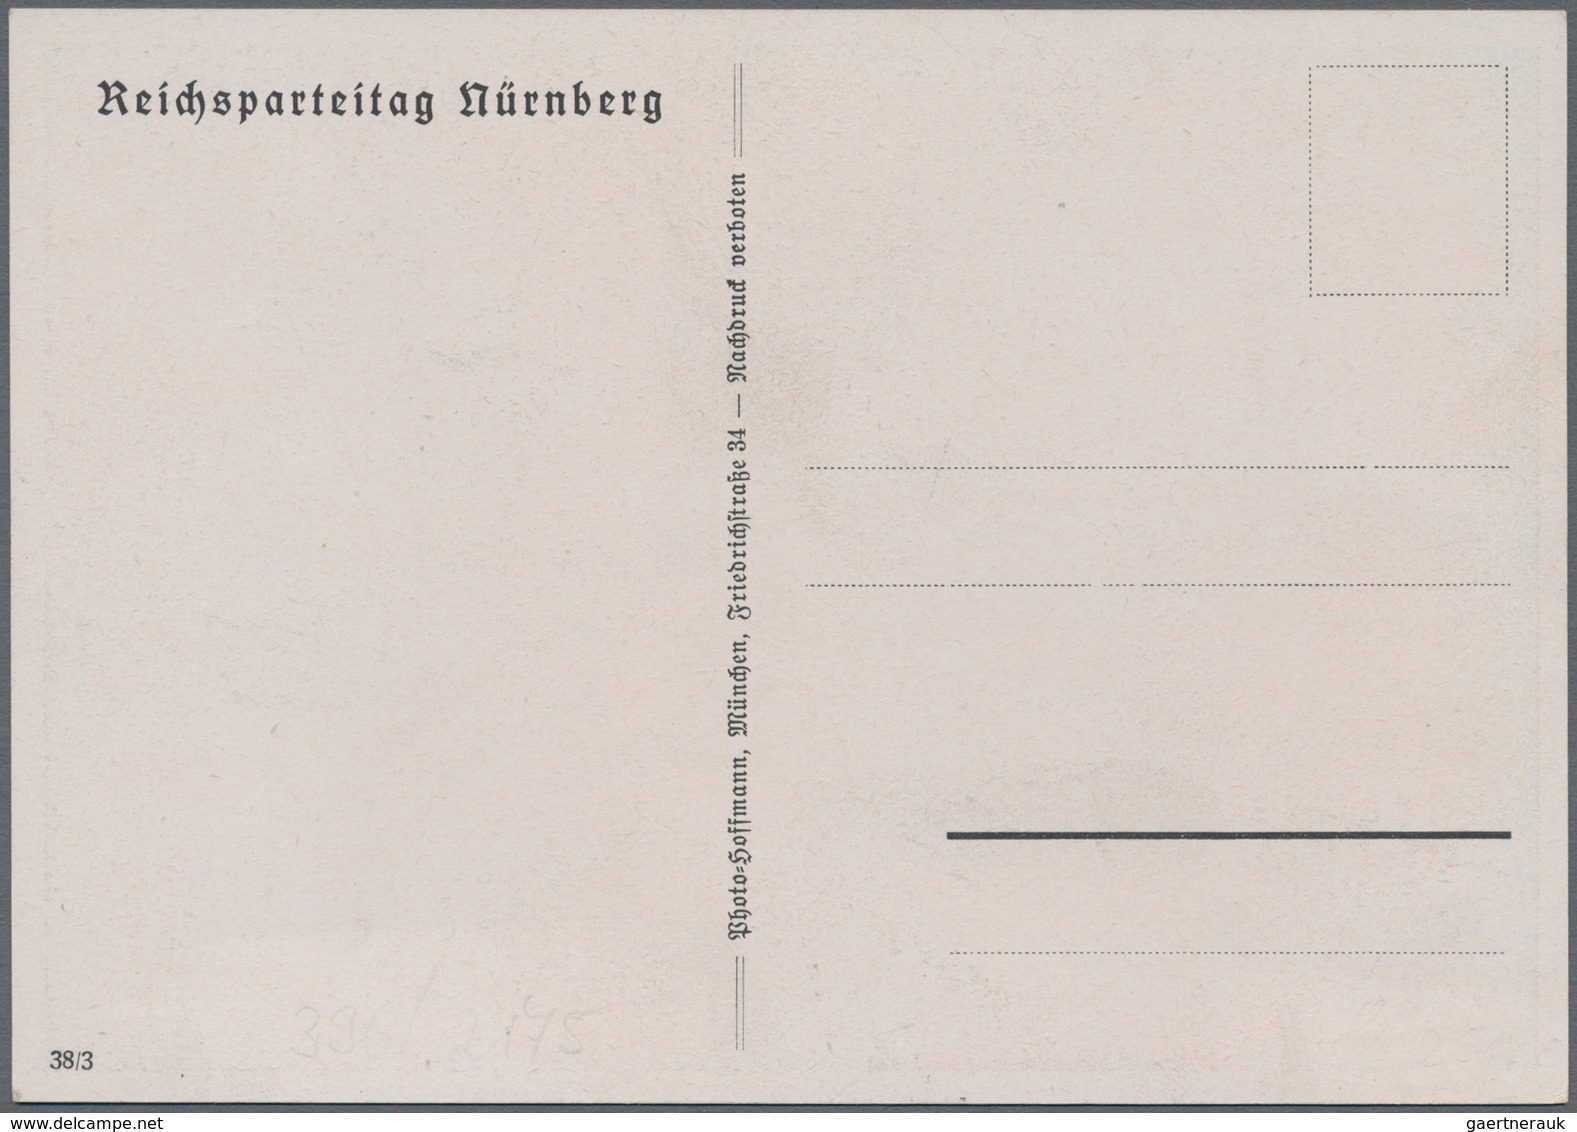 Ansichtskarten: Propaganda: 1938, "REICHSPARTEITAG NÜRNBERG", Kolorierte Propagandakarte Mit Wappen - Political Parties & Elections